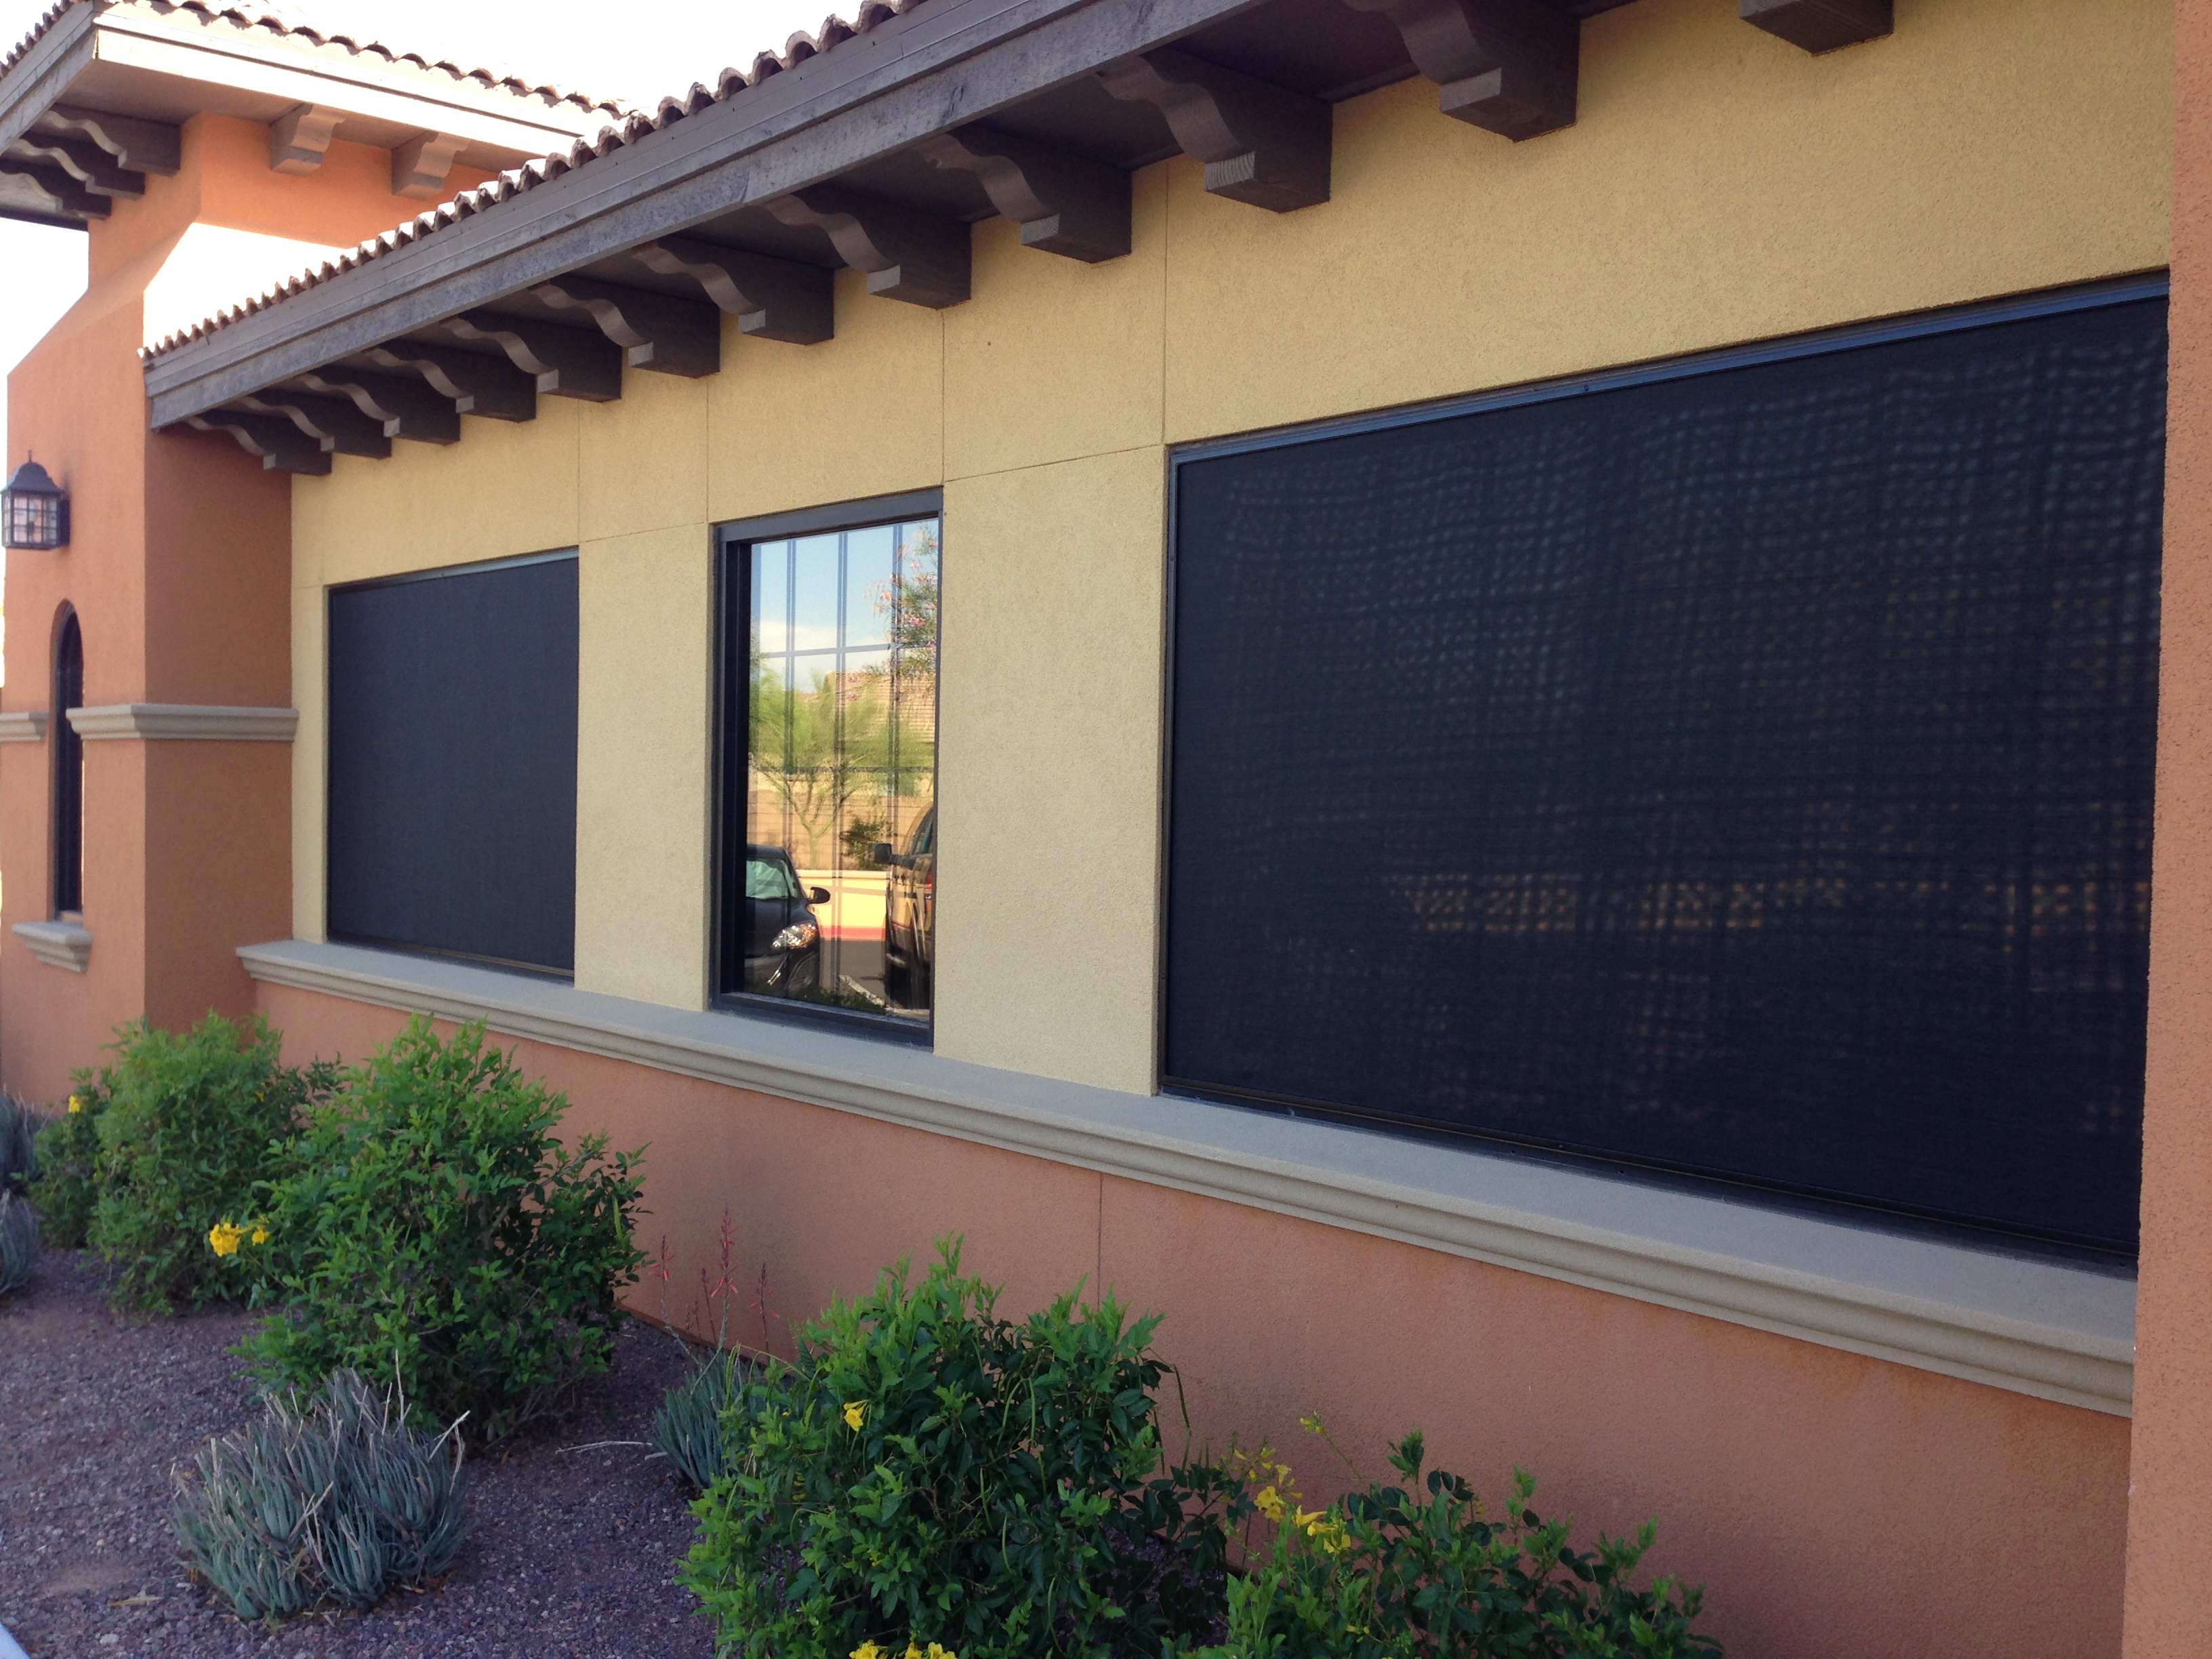 Solar Screens for windows